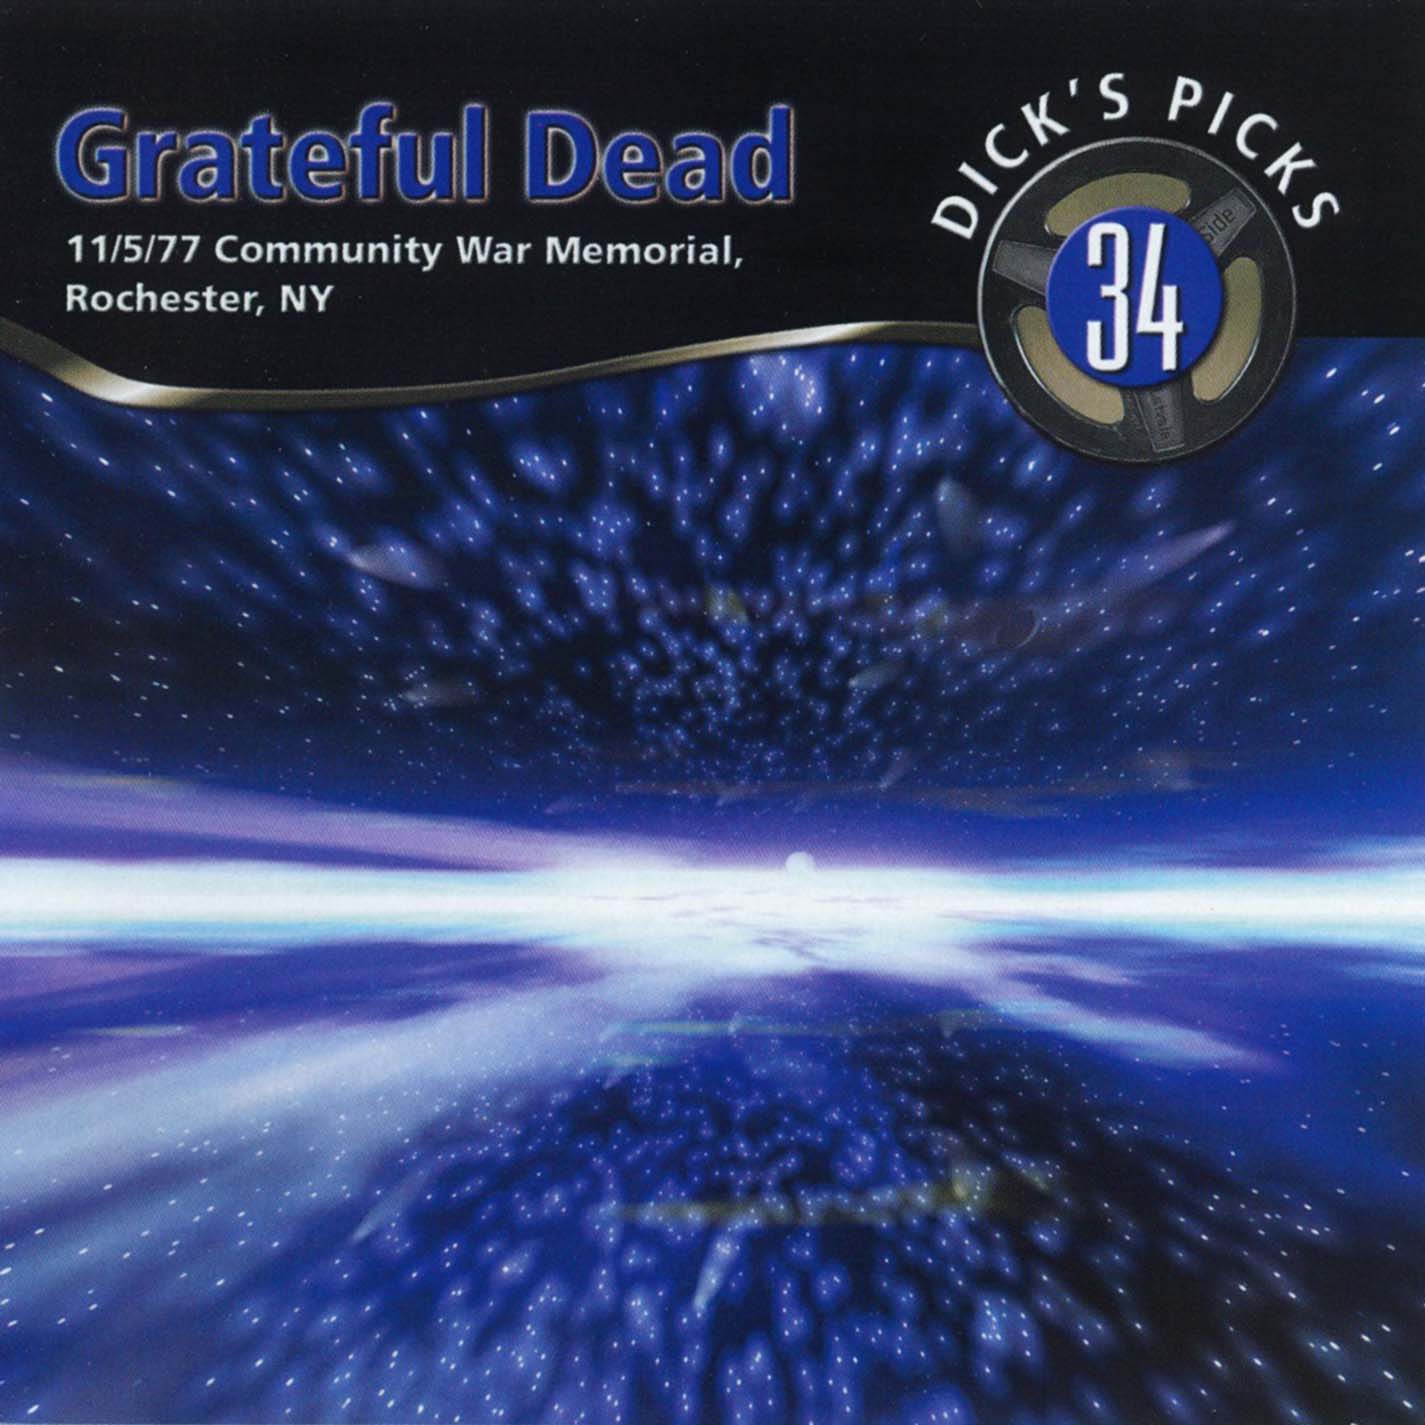 Grateful Dead Dick's Picks 34 album cover artwork